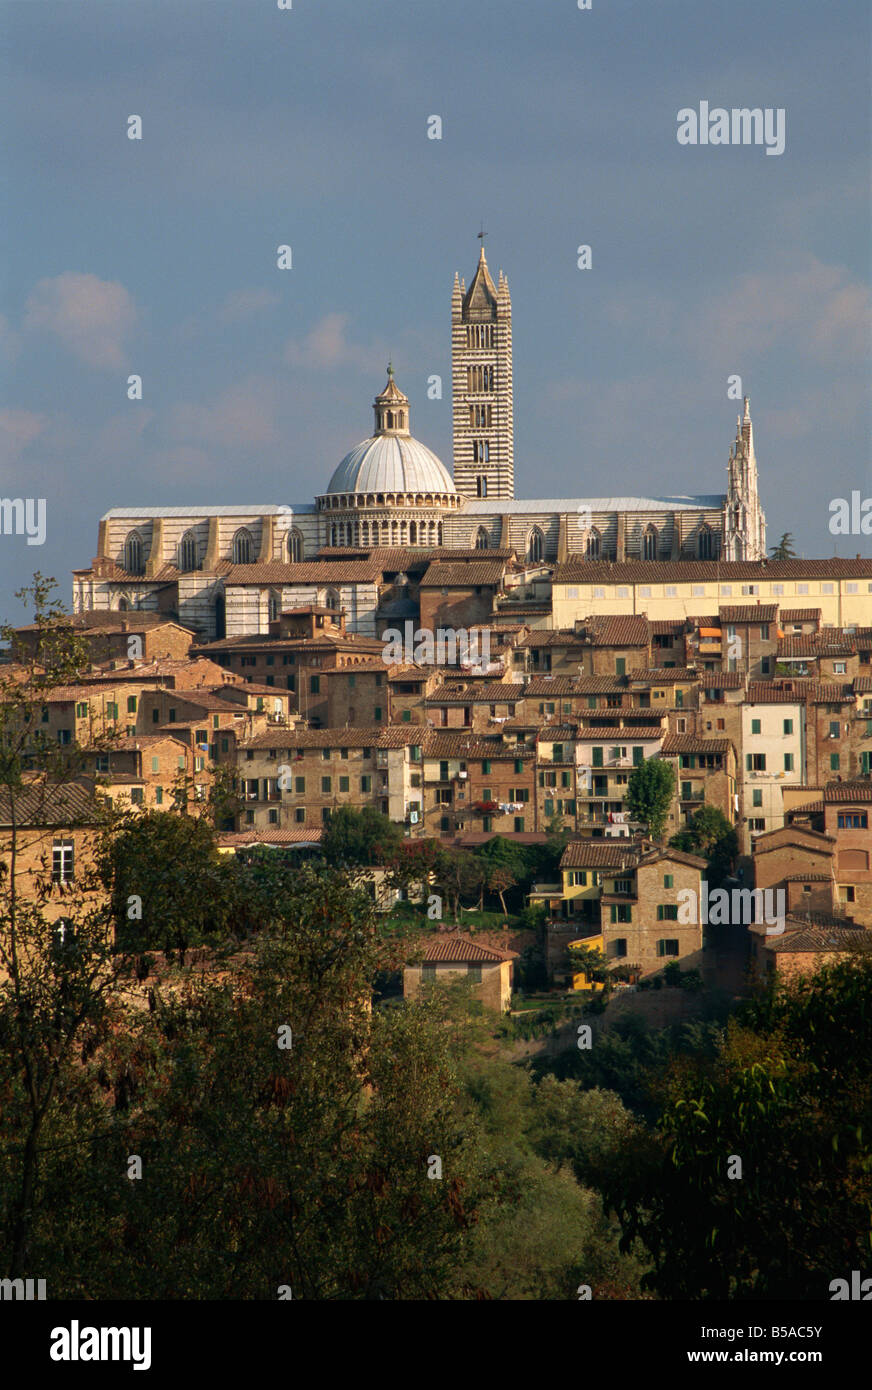 The skyline of Siena Tuscany Italy R Rainford Stock Photo